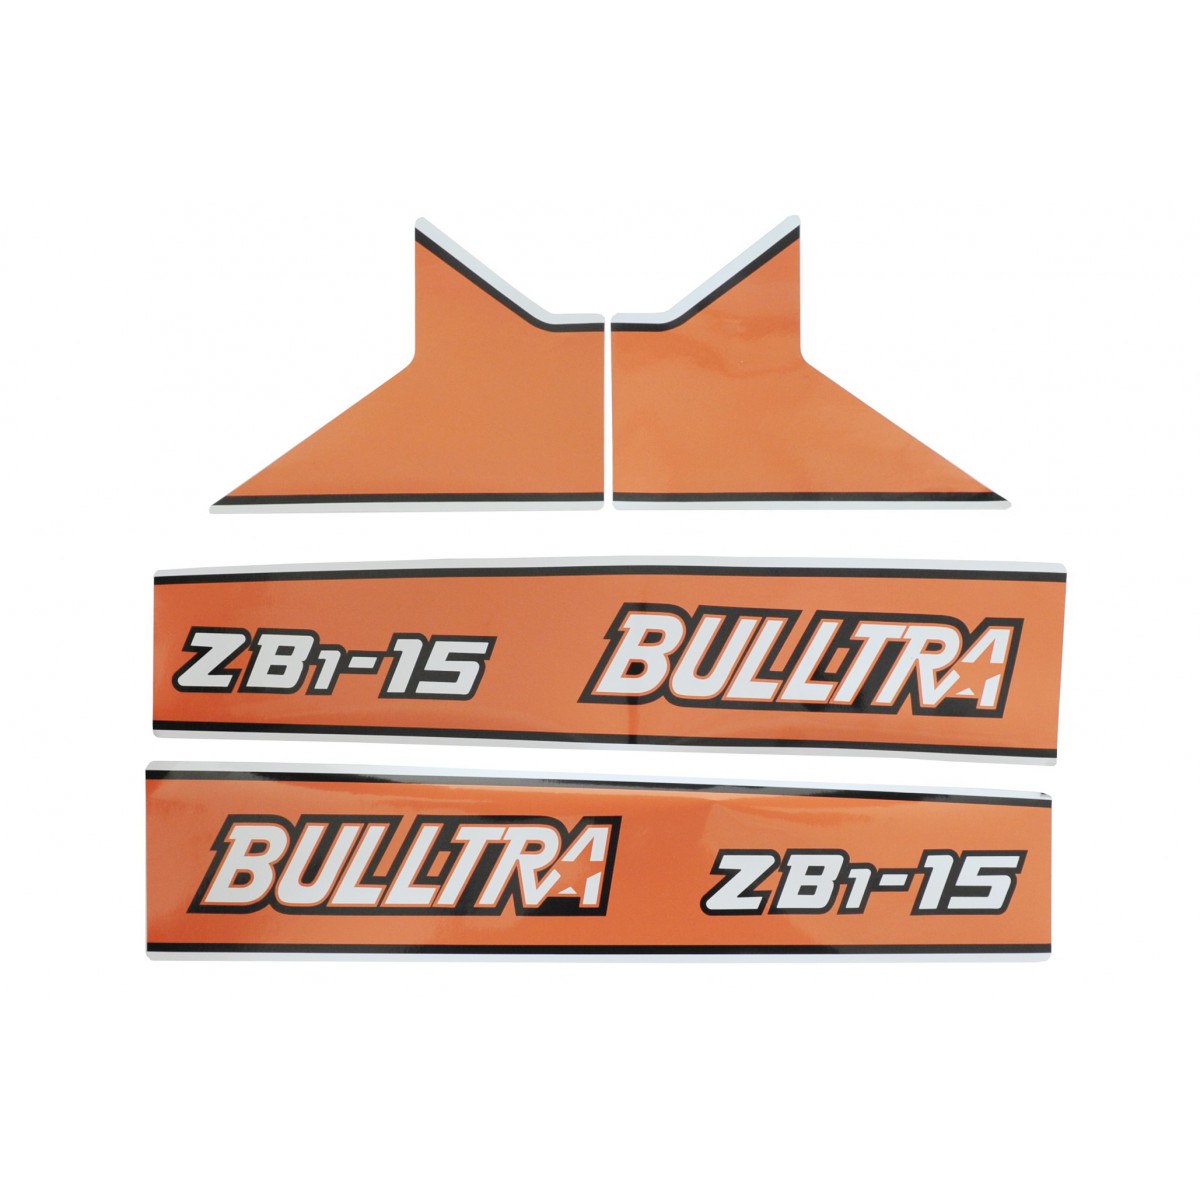 Autocollants Kubota Bulltra B1-15, ZB1-15